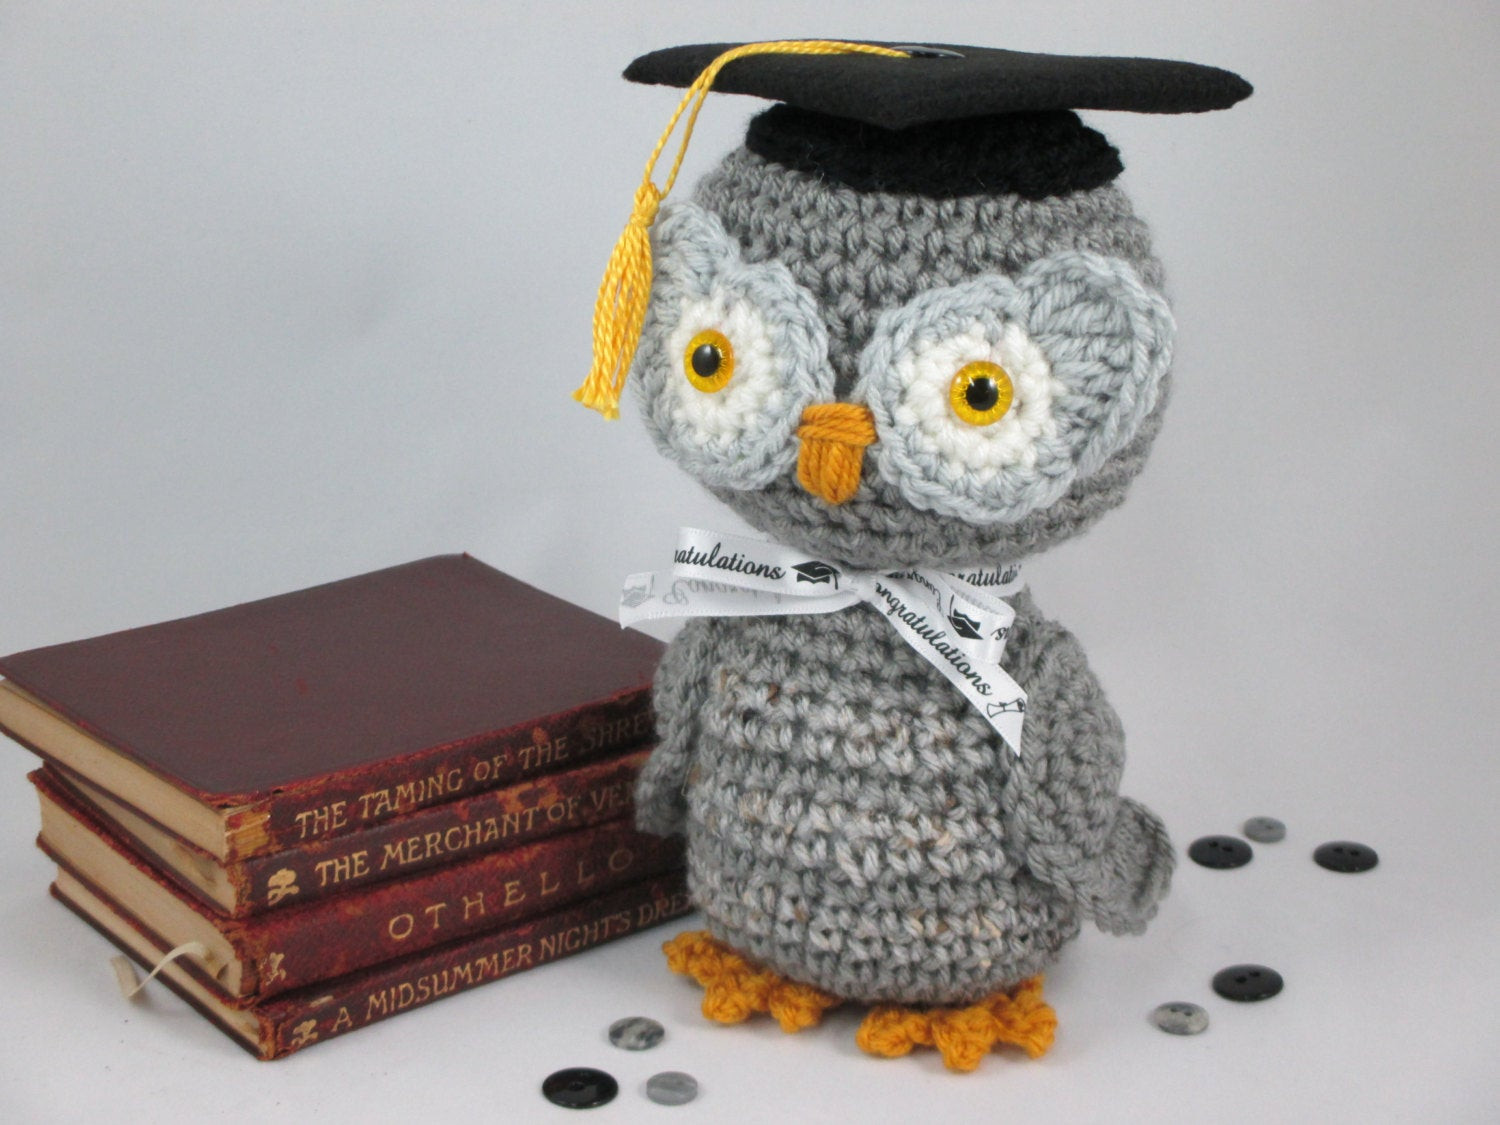 Crochet Graduation Gift Ideas
 Graduation Gift Crochet Owl with Graduate Cap Graduation